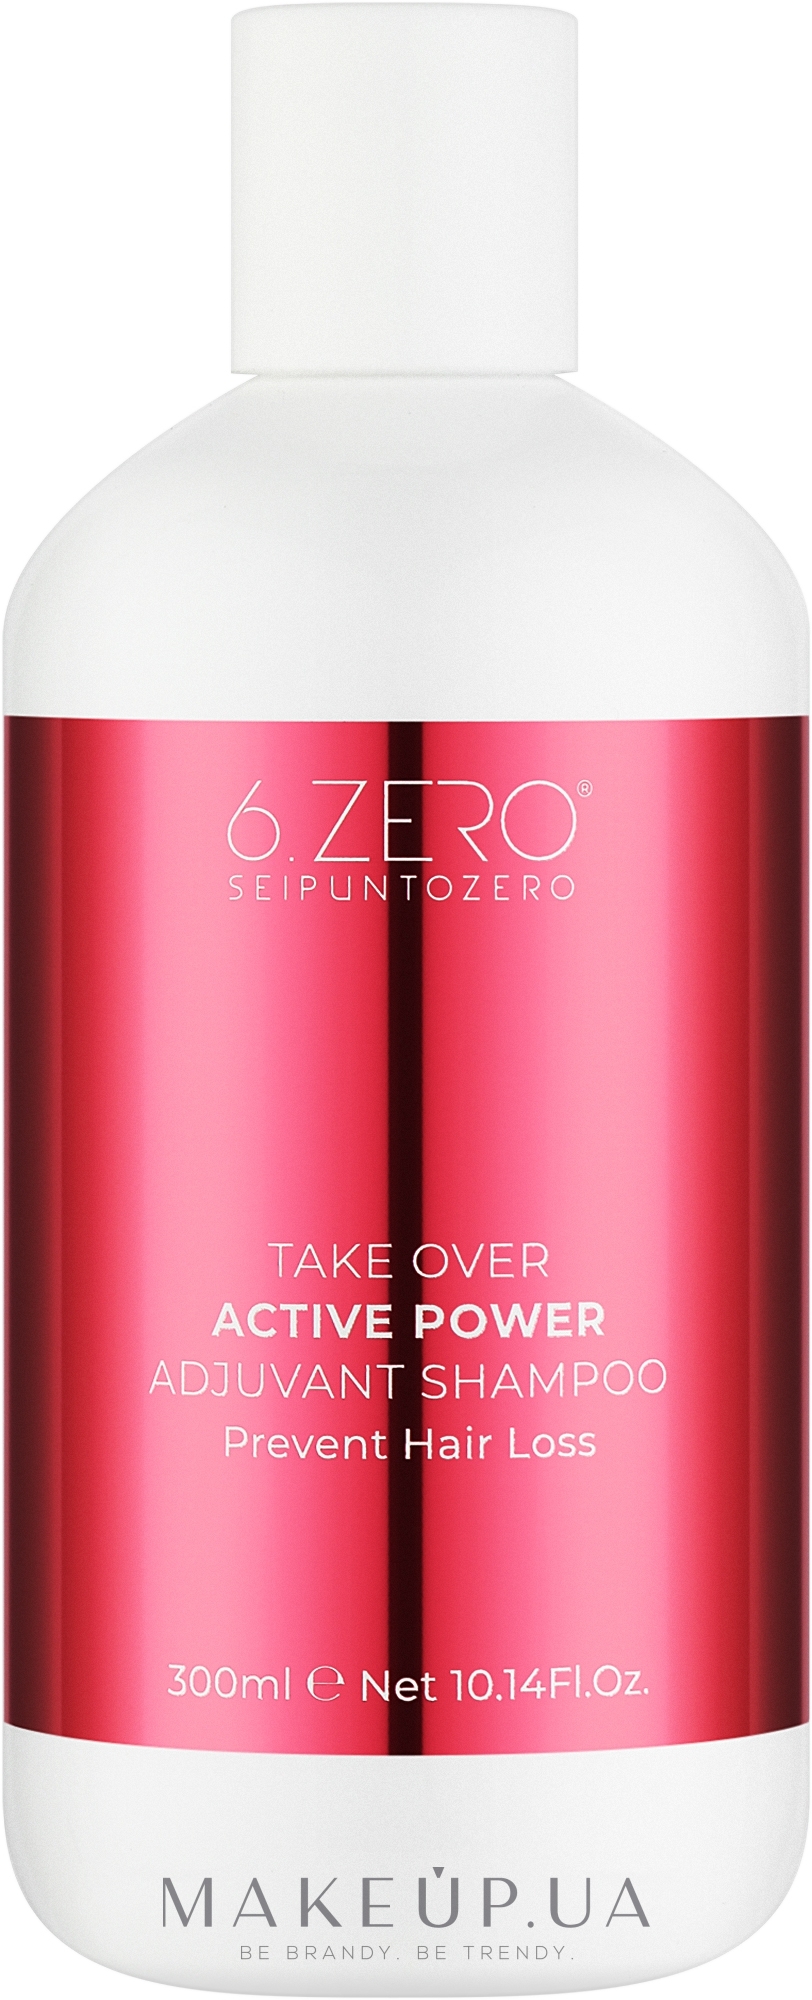 Шампунь проти випадання волосся - Seipuntozero Take Over Active Power — фото 300ml